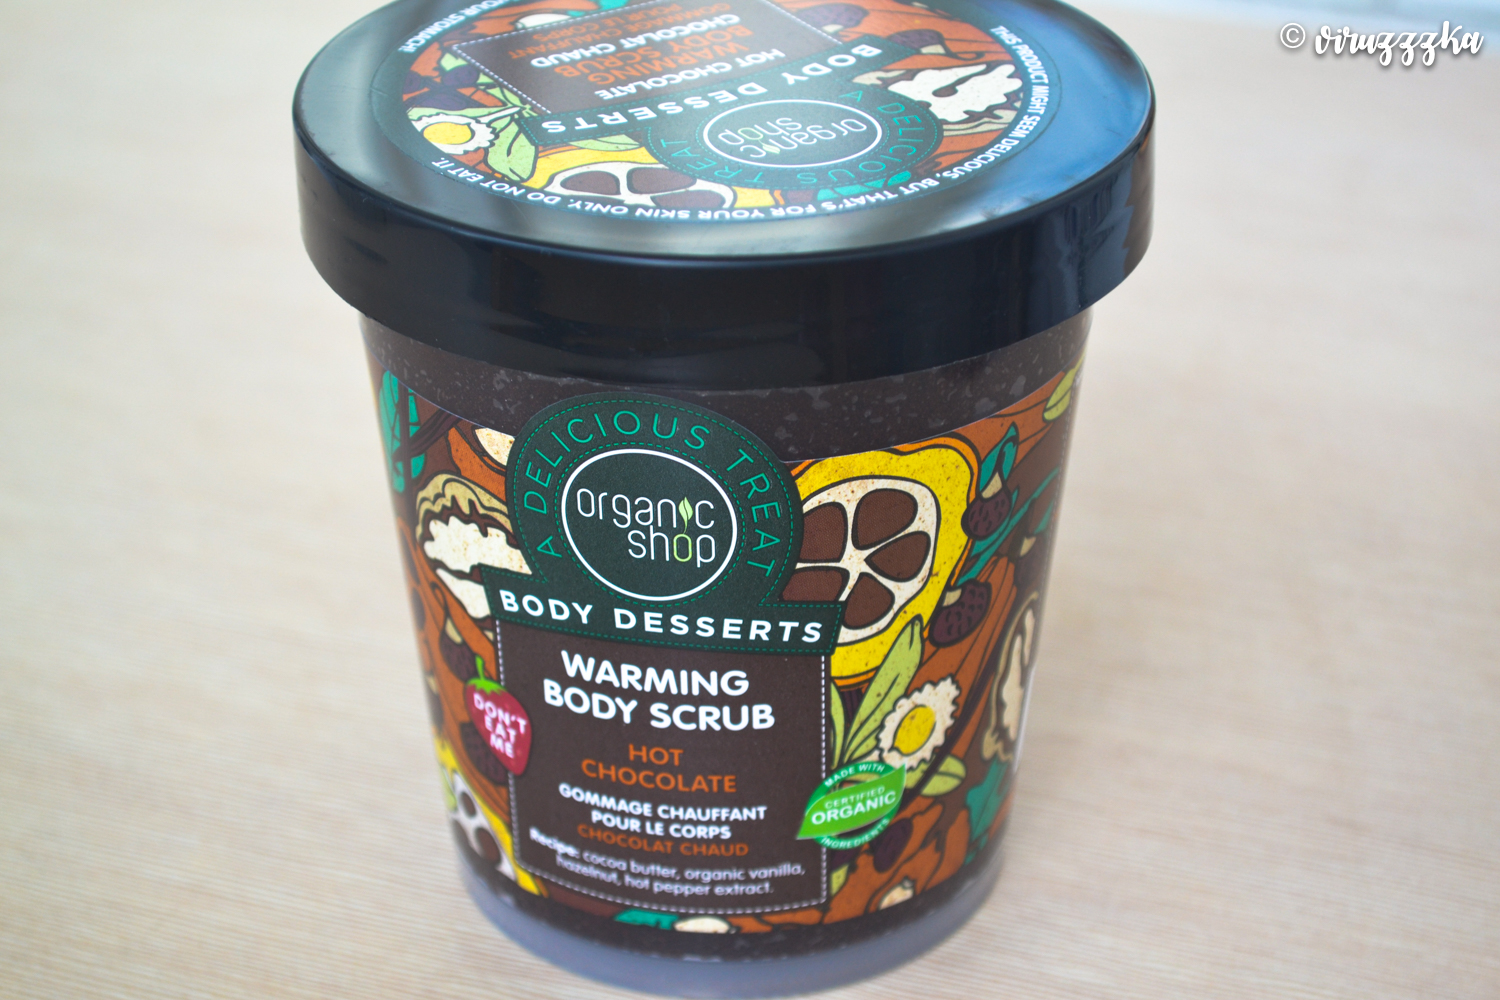 Organic Shop Body Desserts Hot Chocolate Review